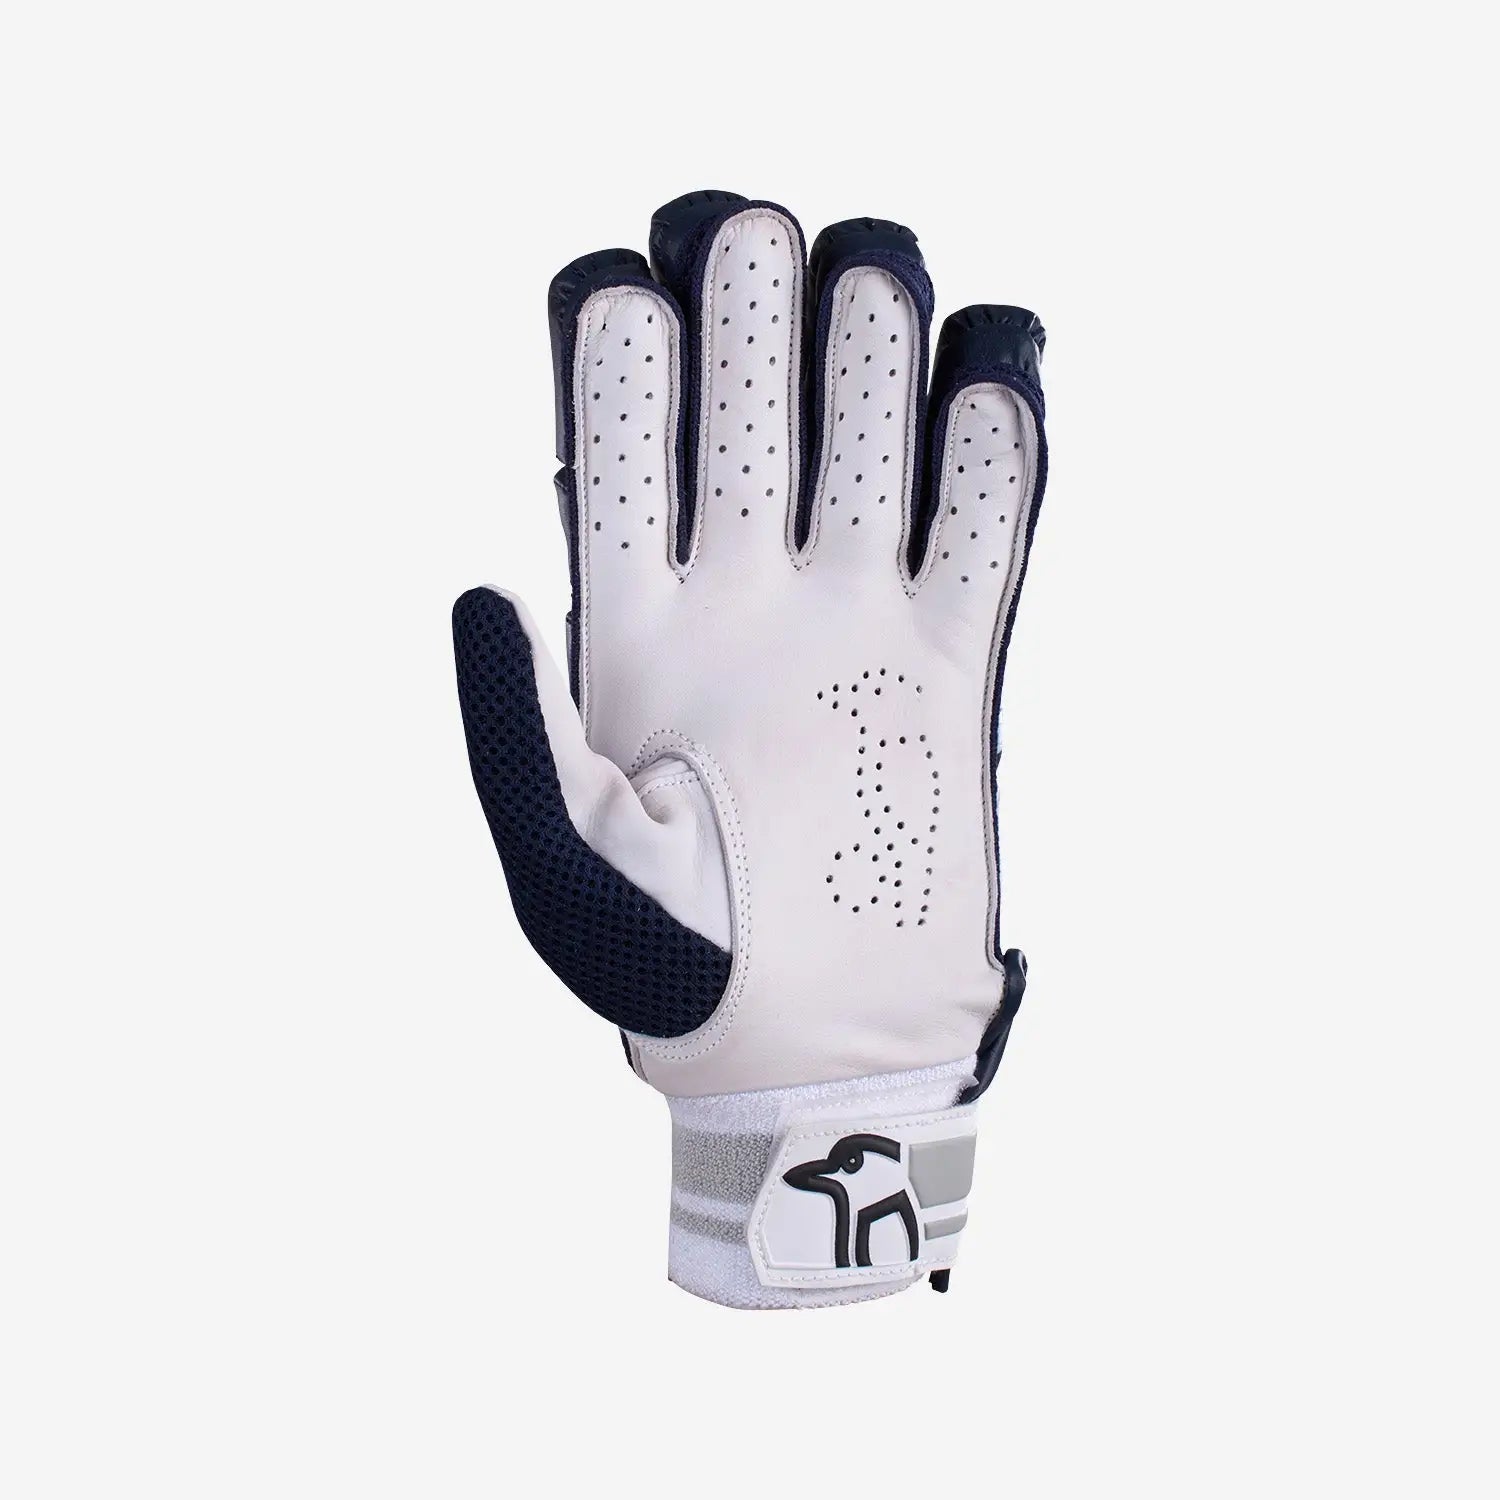 Kookaburra 4.1 T20 Cricket Batting Gloves Navy - GLOVE - BATTING